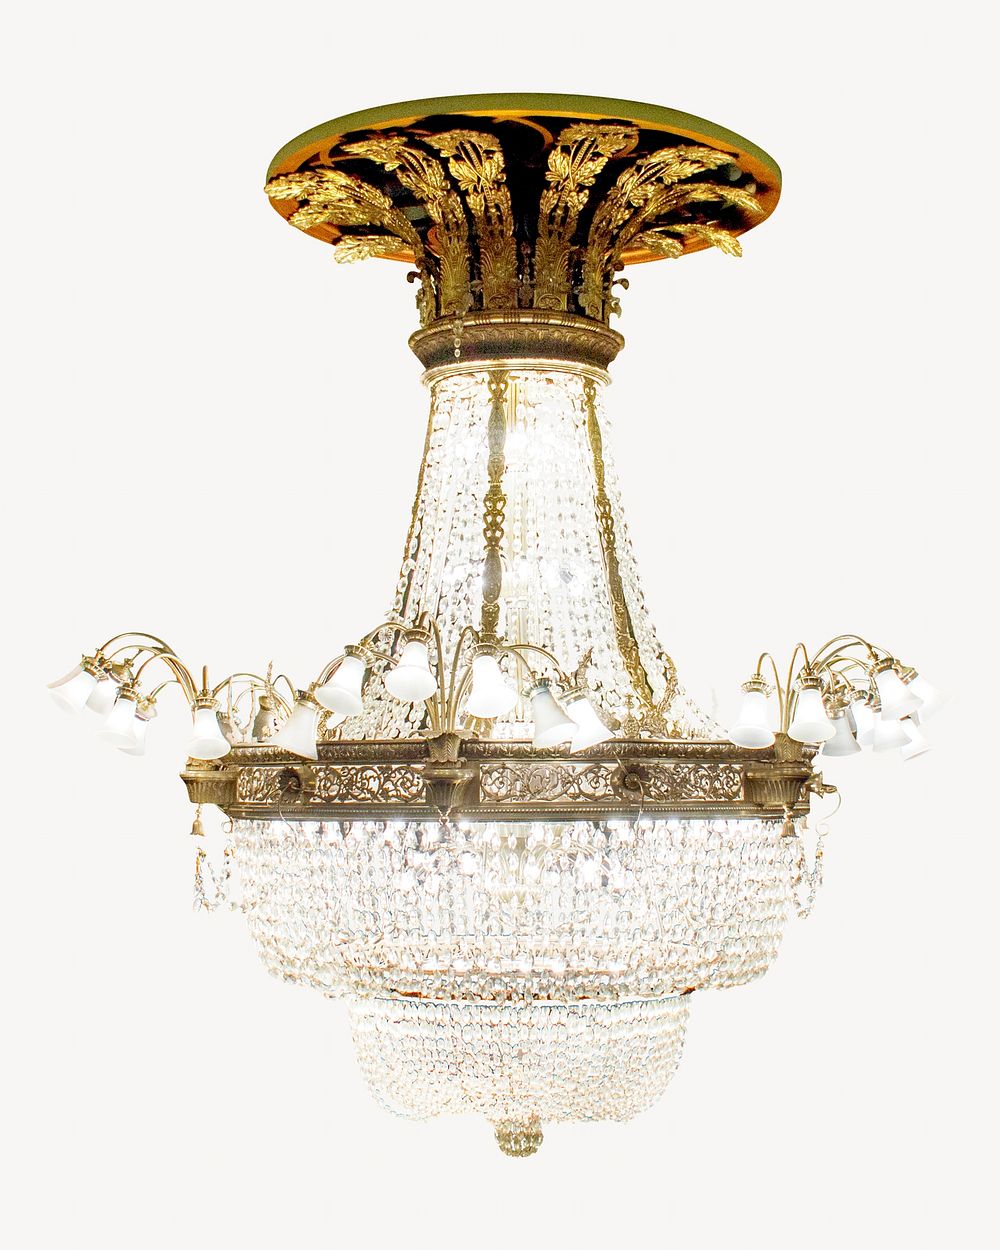 Elegant chandelier, isolated object